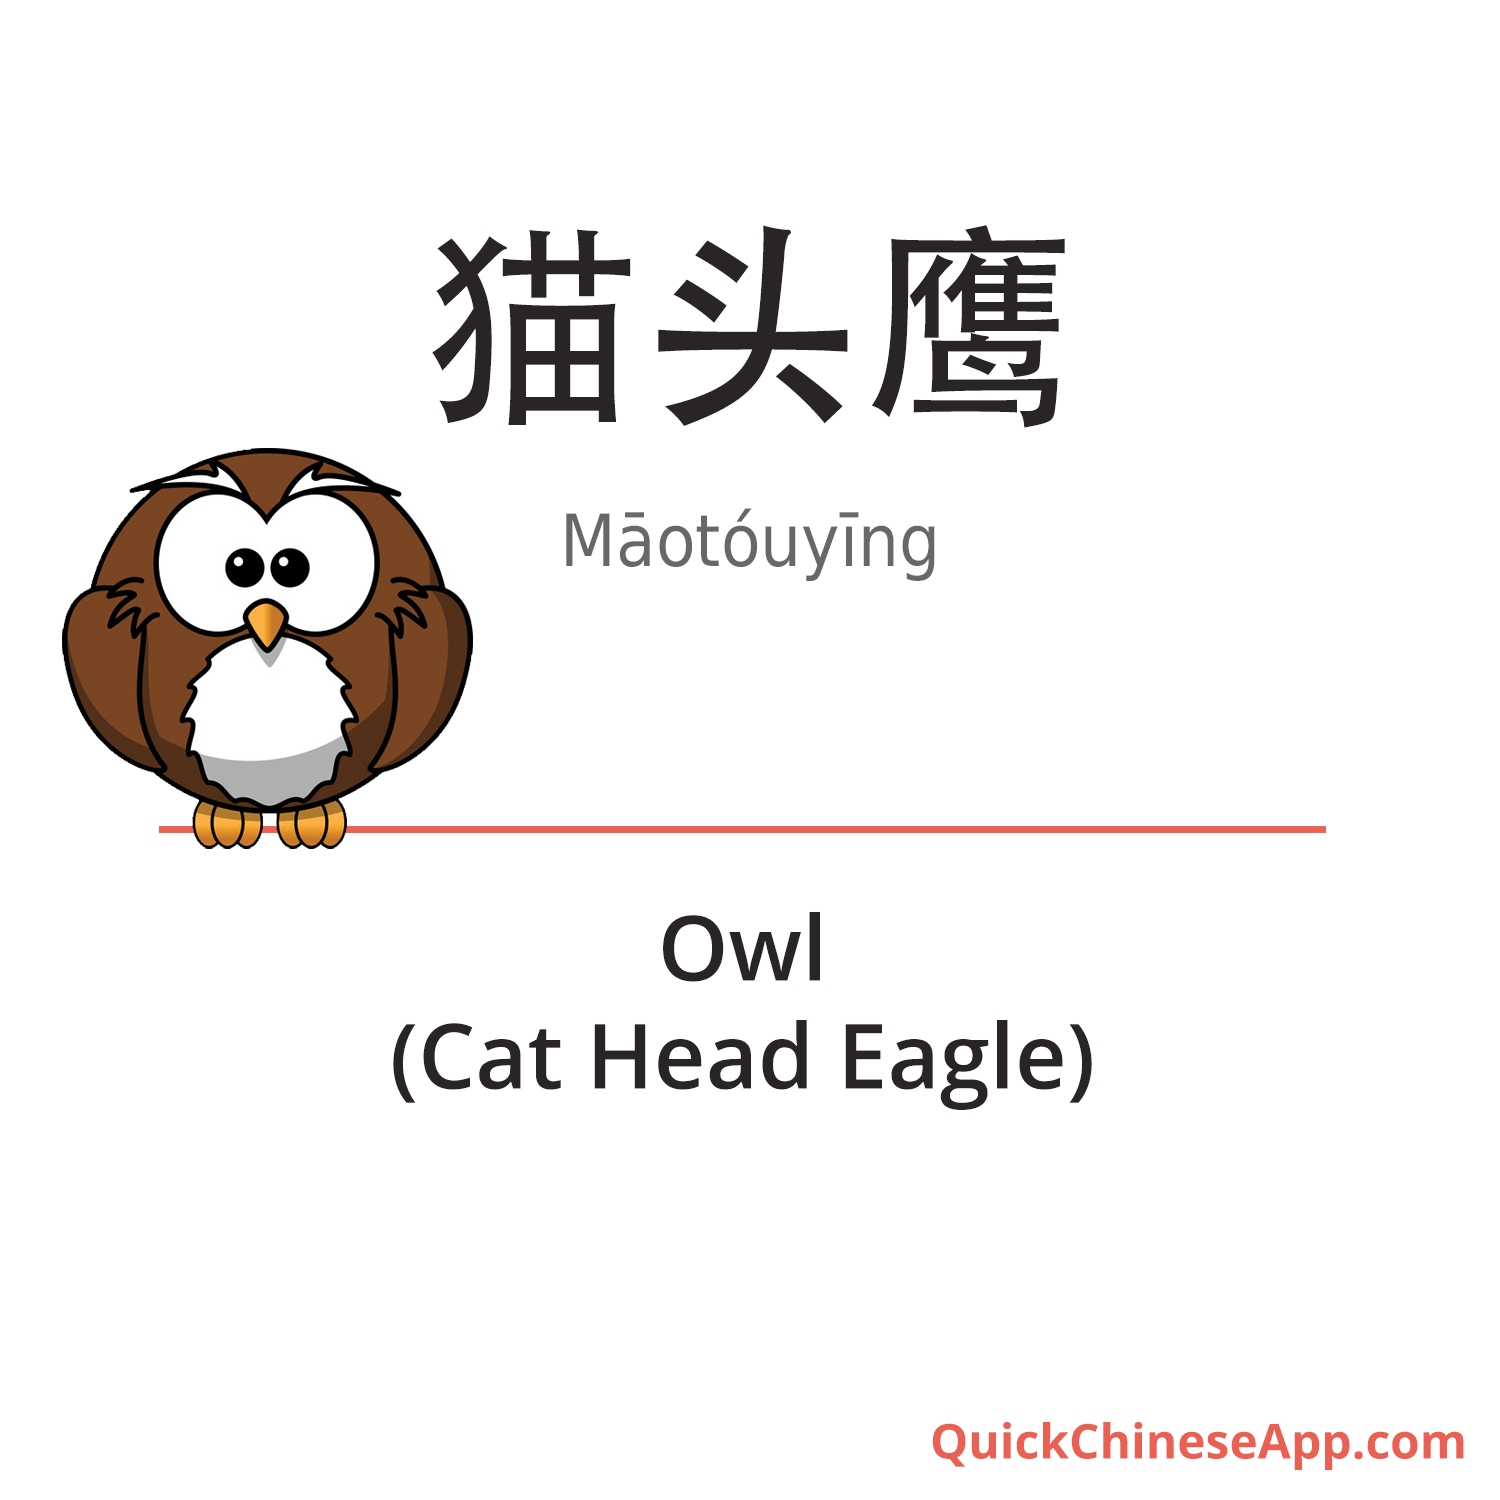 The mandarin literal translation for Owl is brilliant